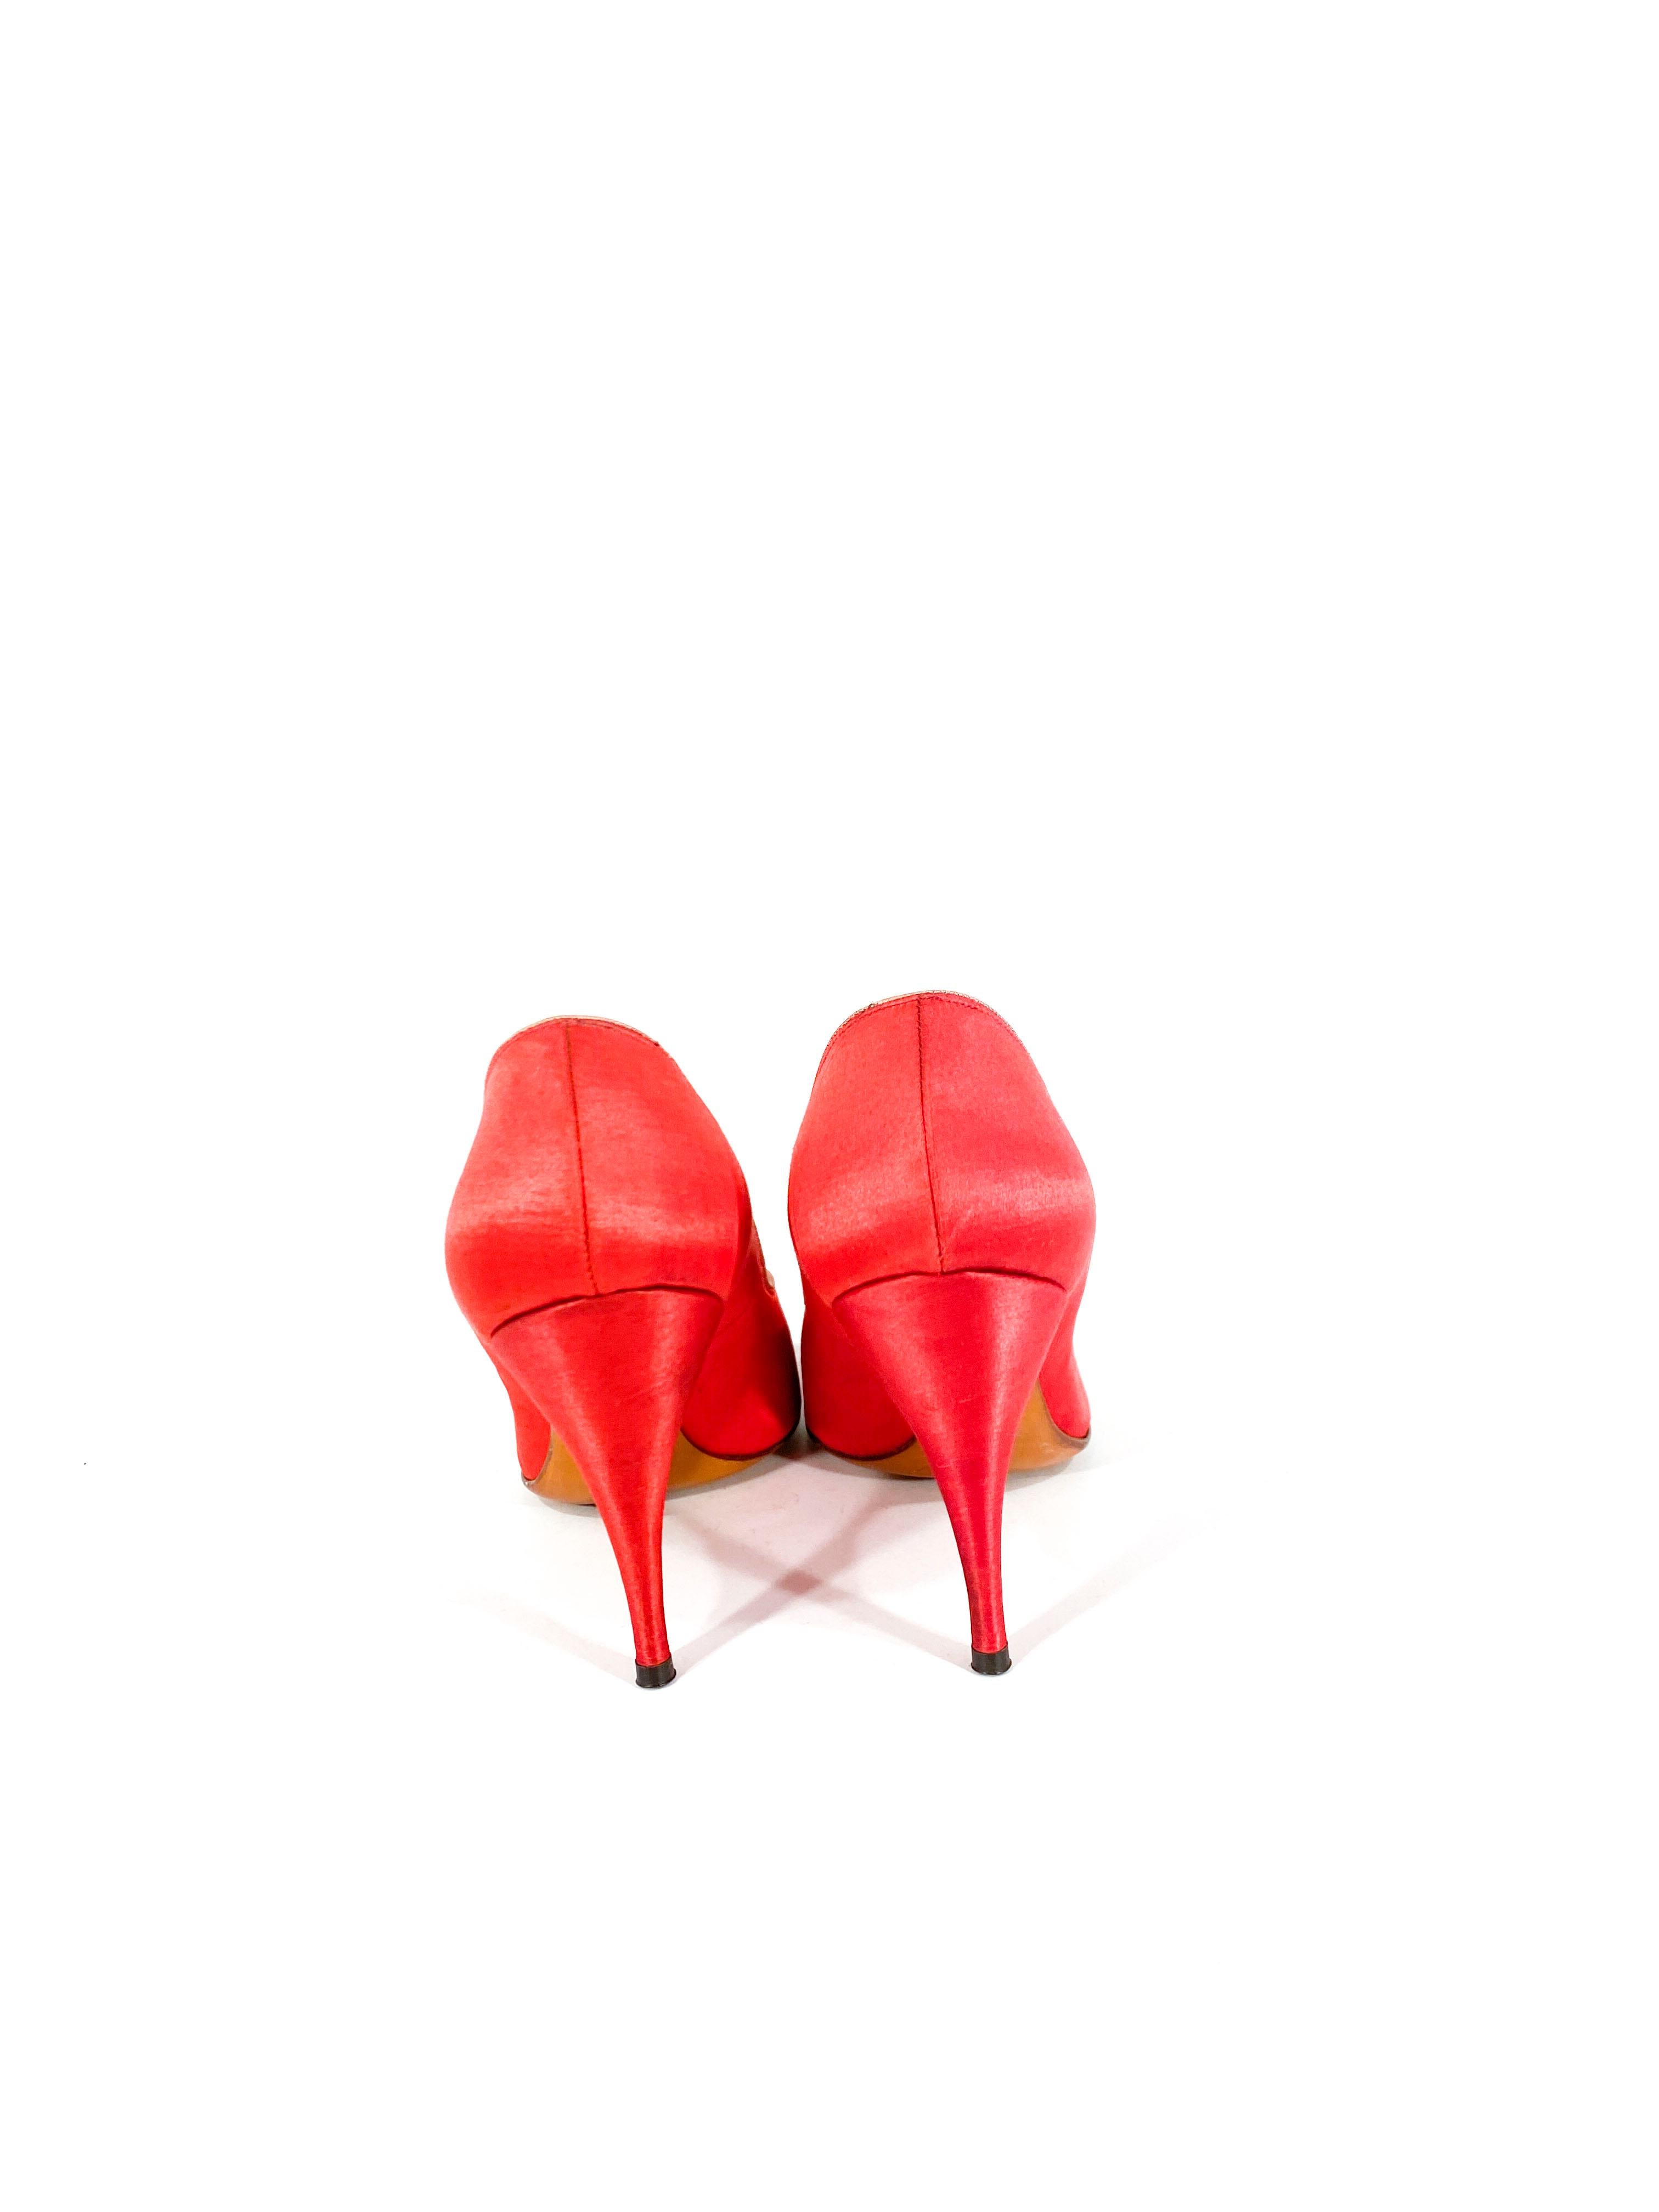 1960's stiletto heels